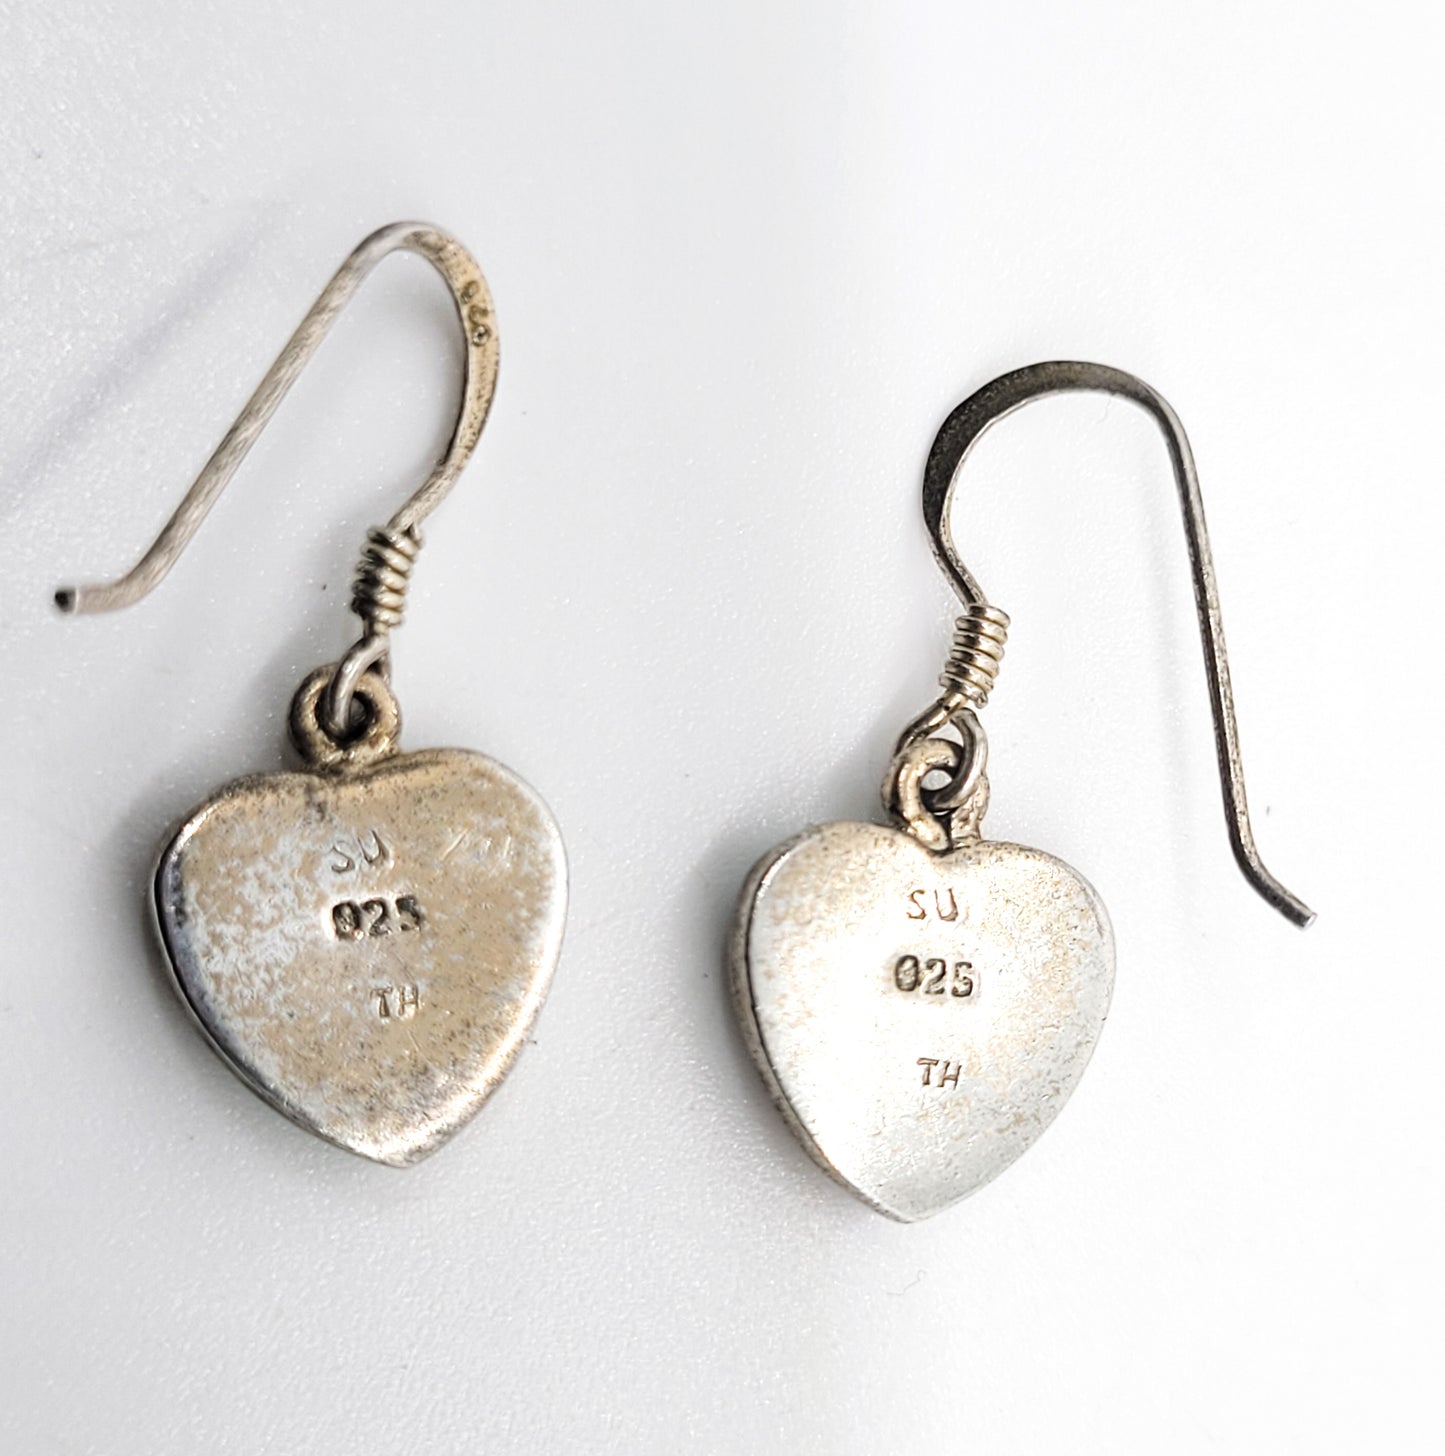 SU TH Southwestern gemstone inlay heart vintage signed drop sterling silver earrings